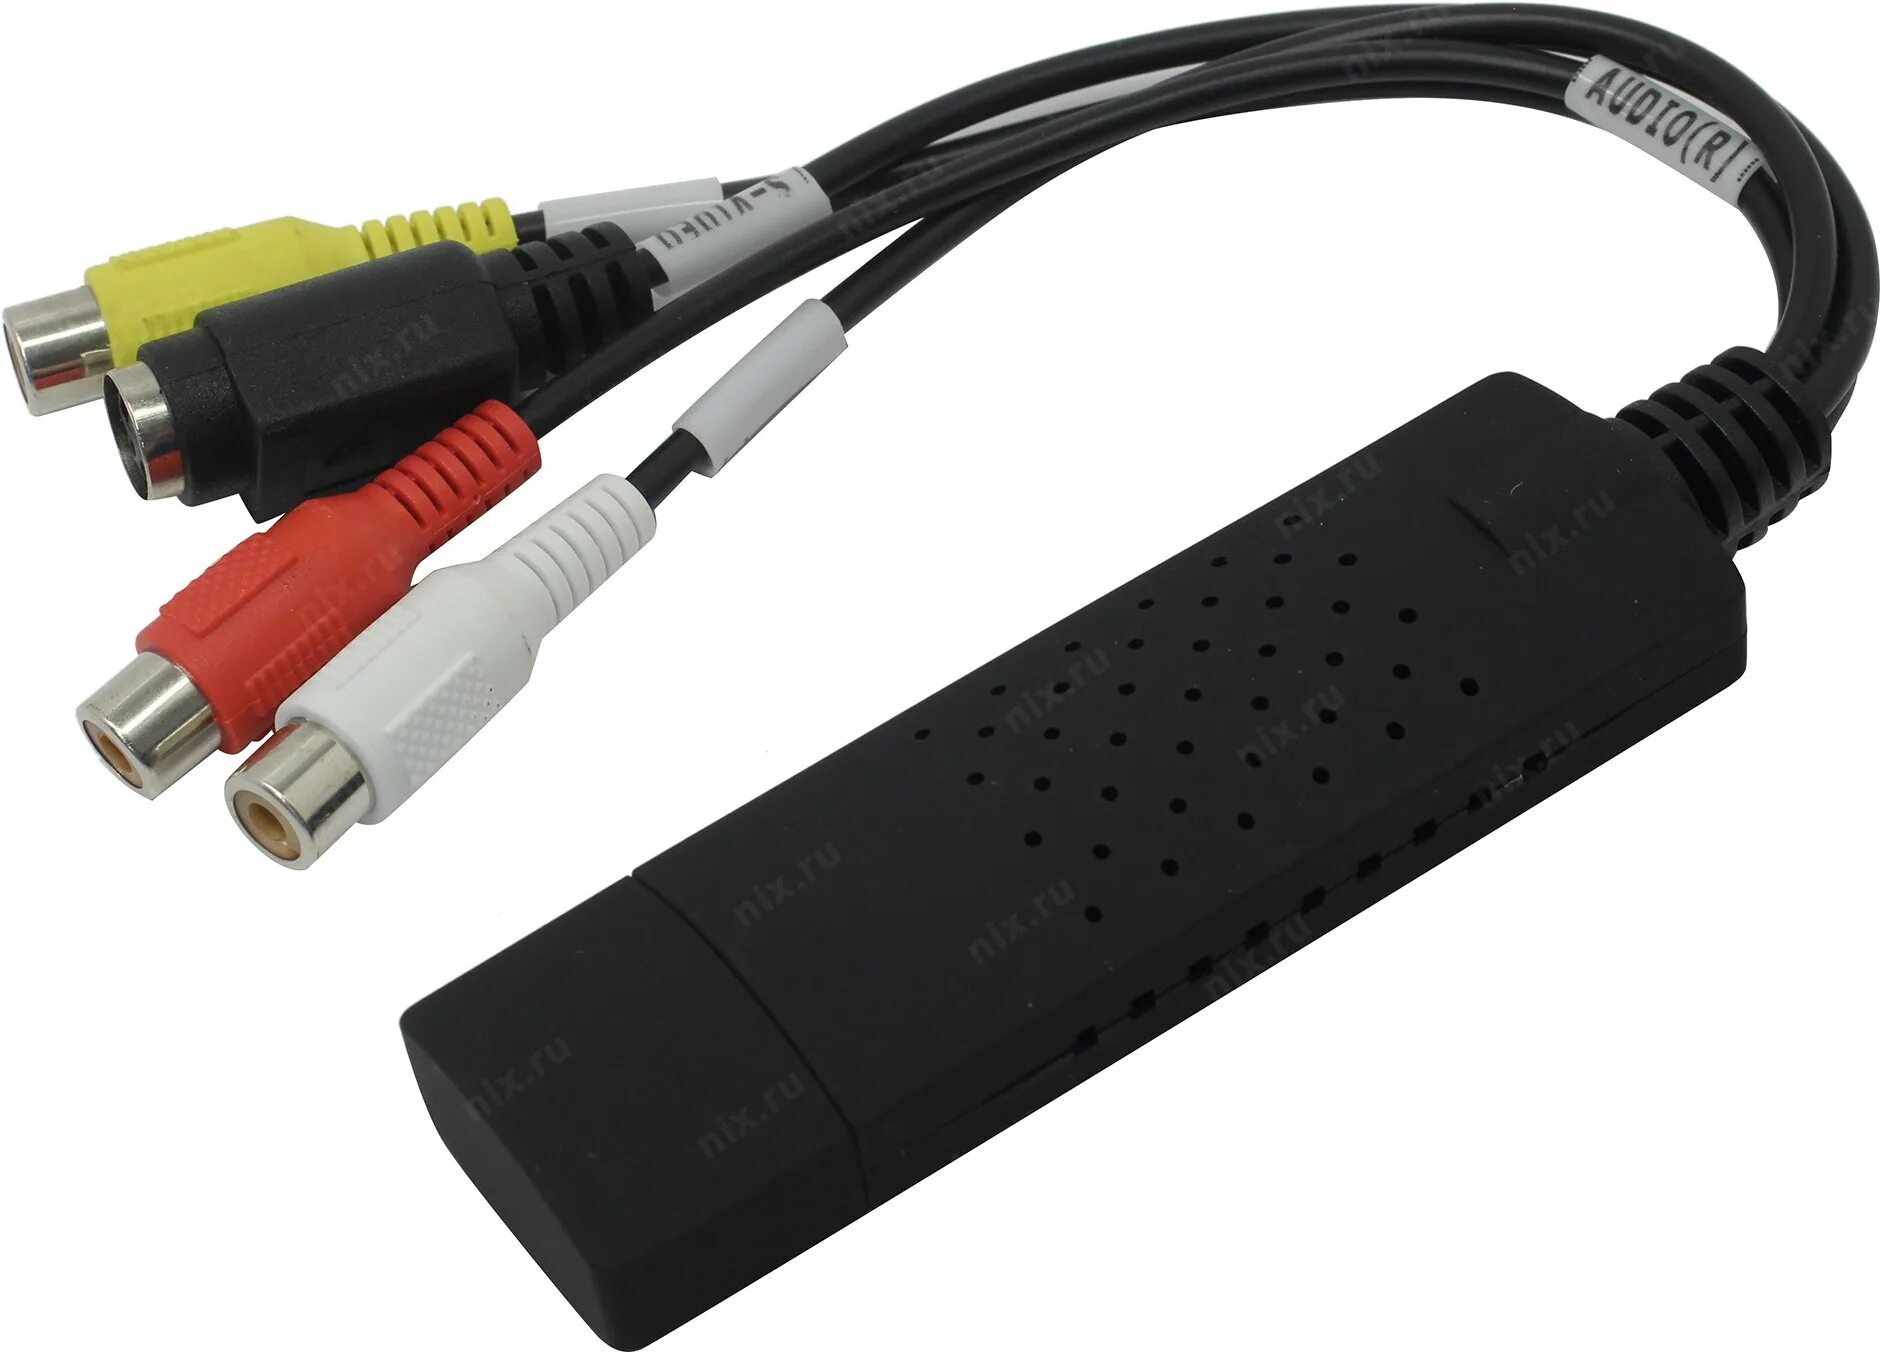 Easy cap 2.0. EASYCAP USB 2.0. Triton Video Adapter USB 2.0. Декодер EASYCAP I USB 2.0 купить. USB S-Video.